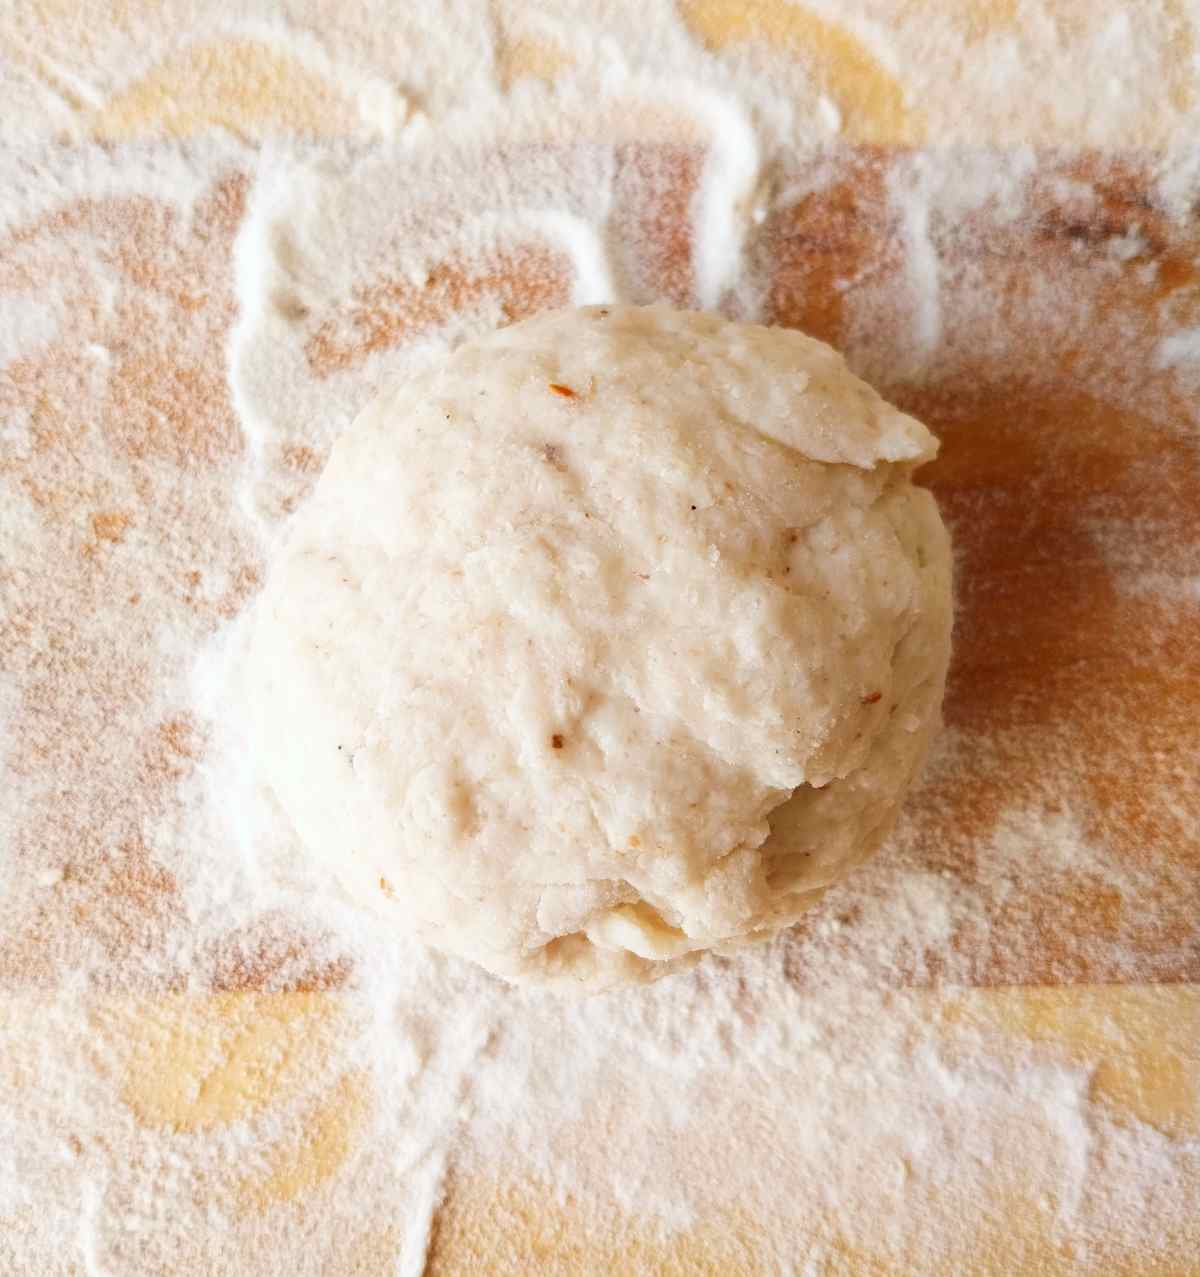 A piece of dough shaped into a ball.